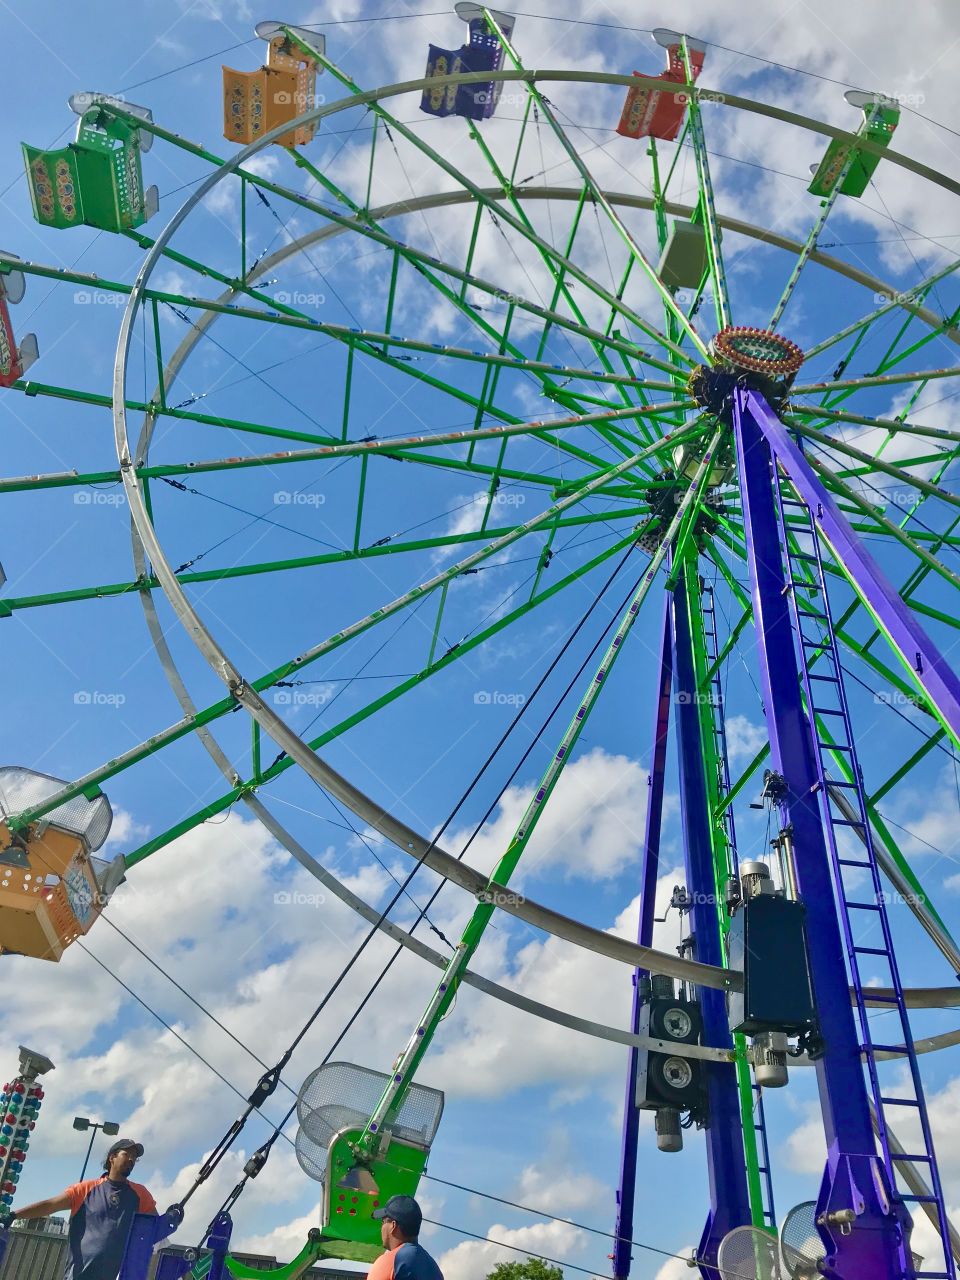 Ferris Wheel against a beautiful blue sky 